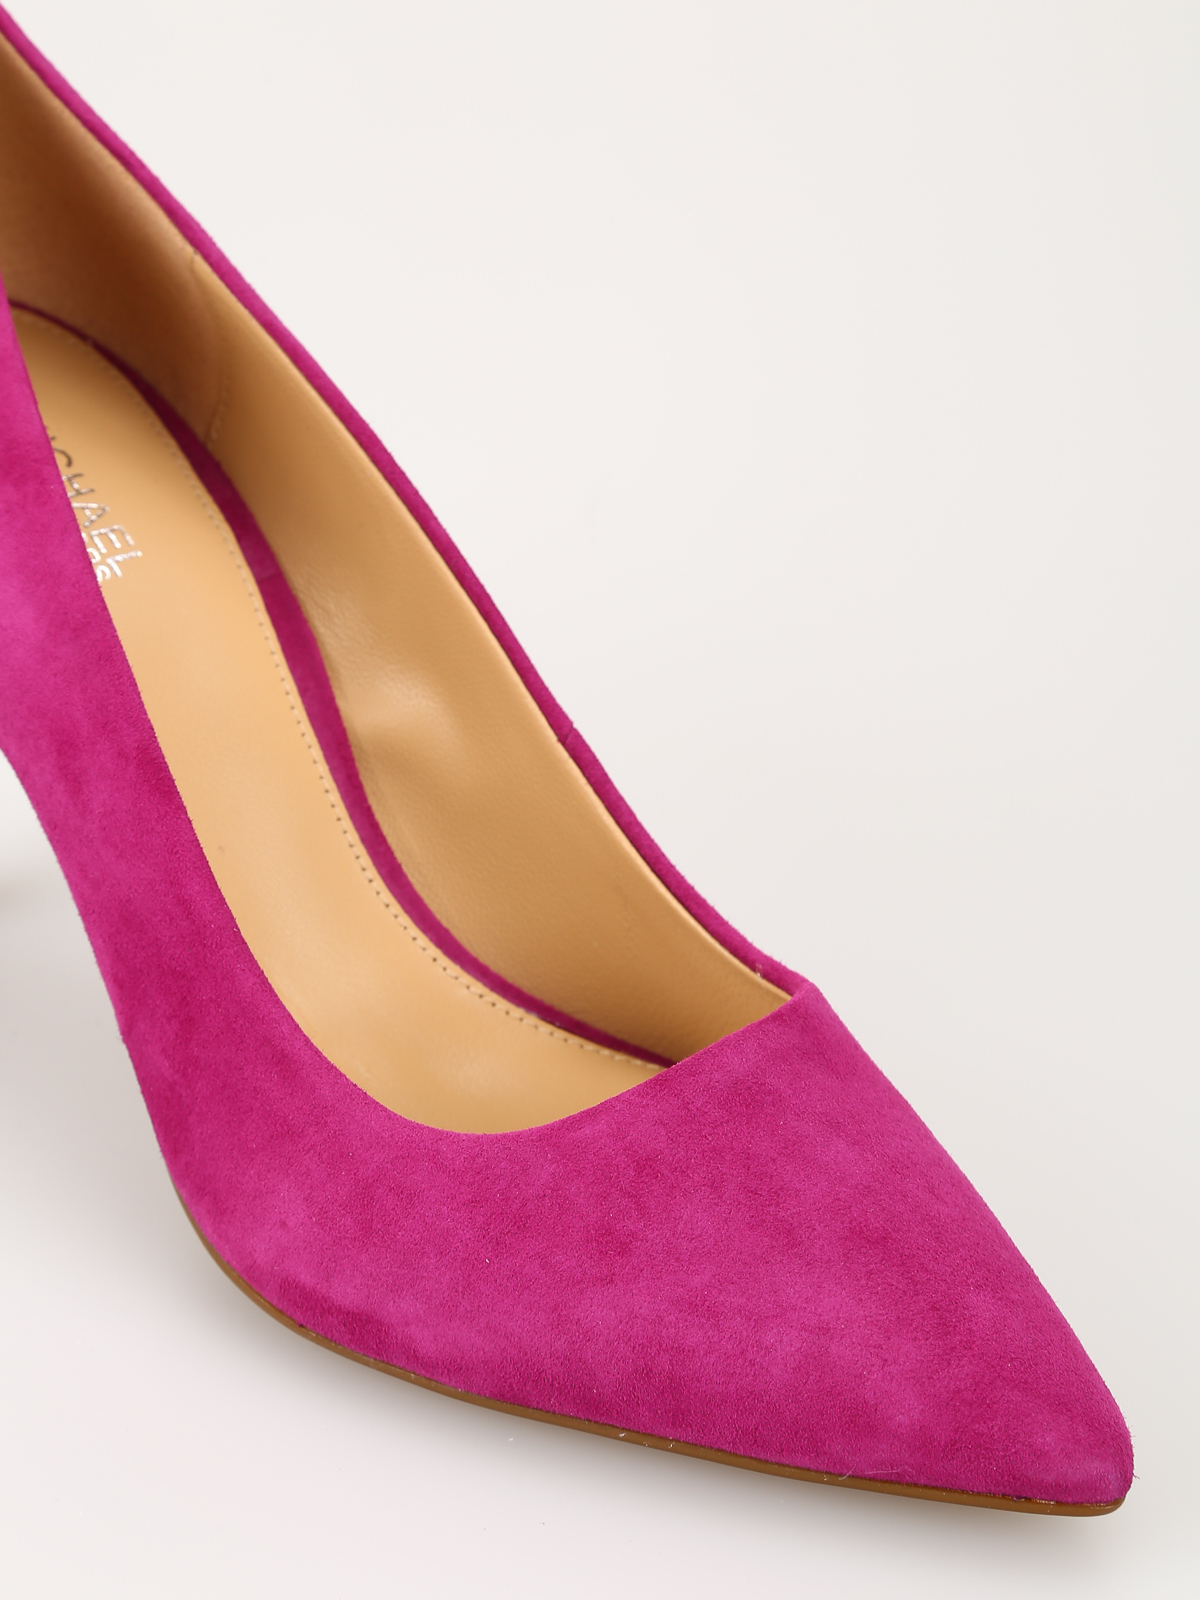 michael kors purple heels